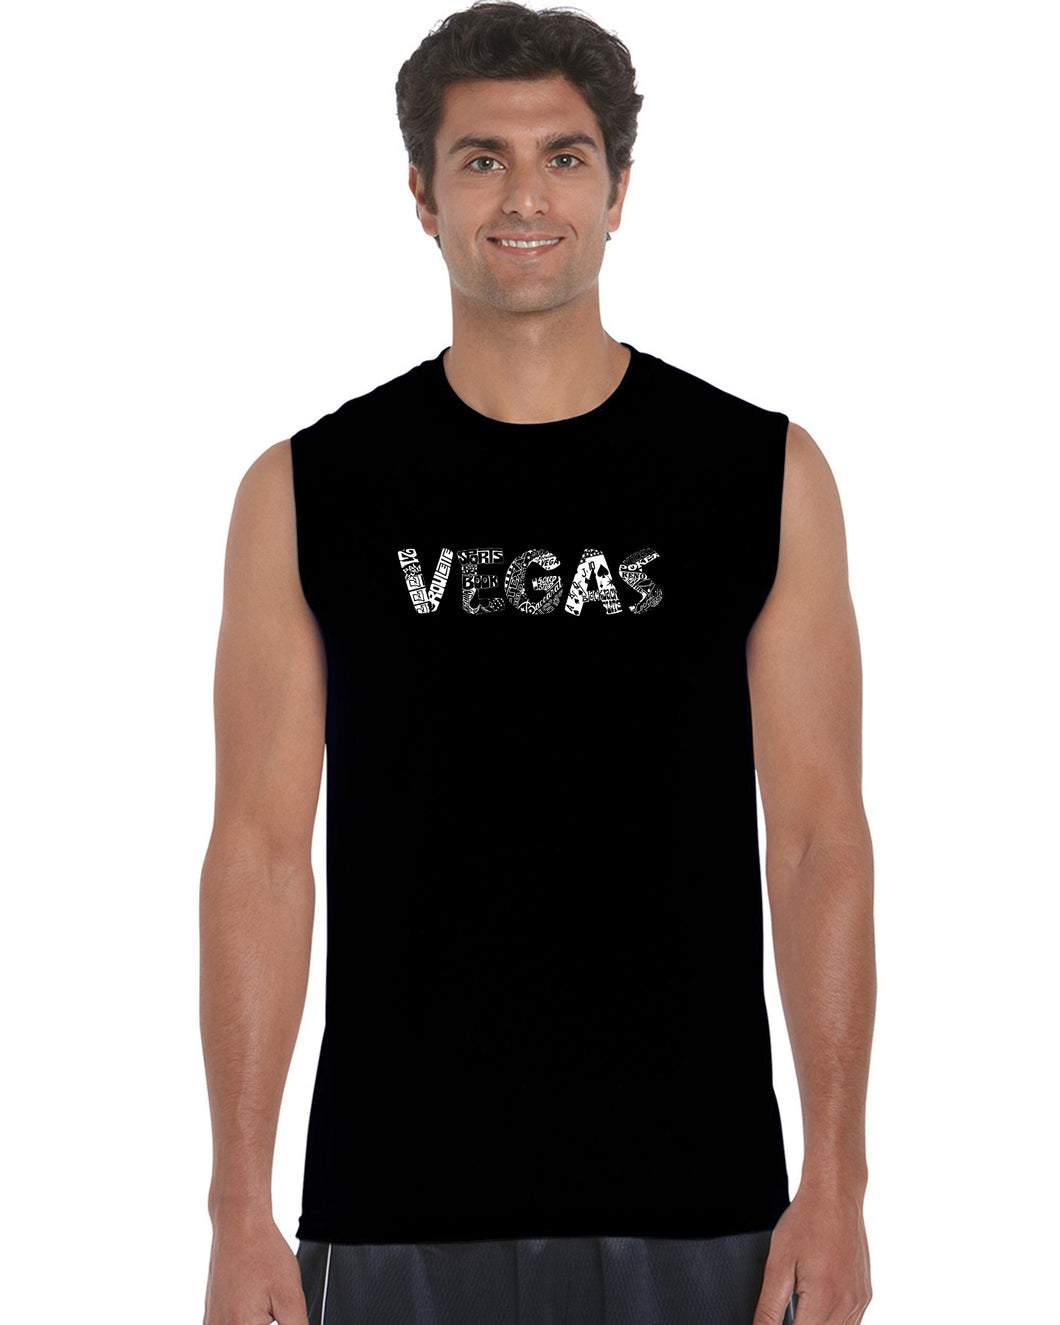 VEGAS - Men's Word Art Sleeveless T-Shirt